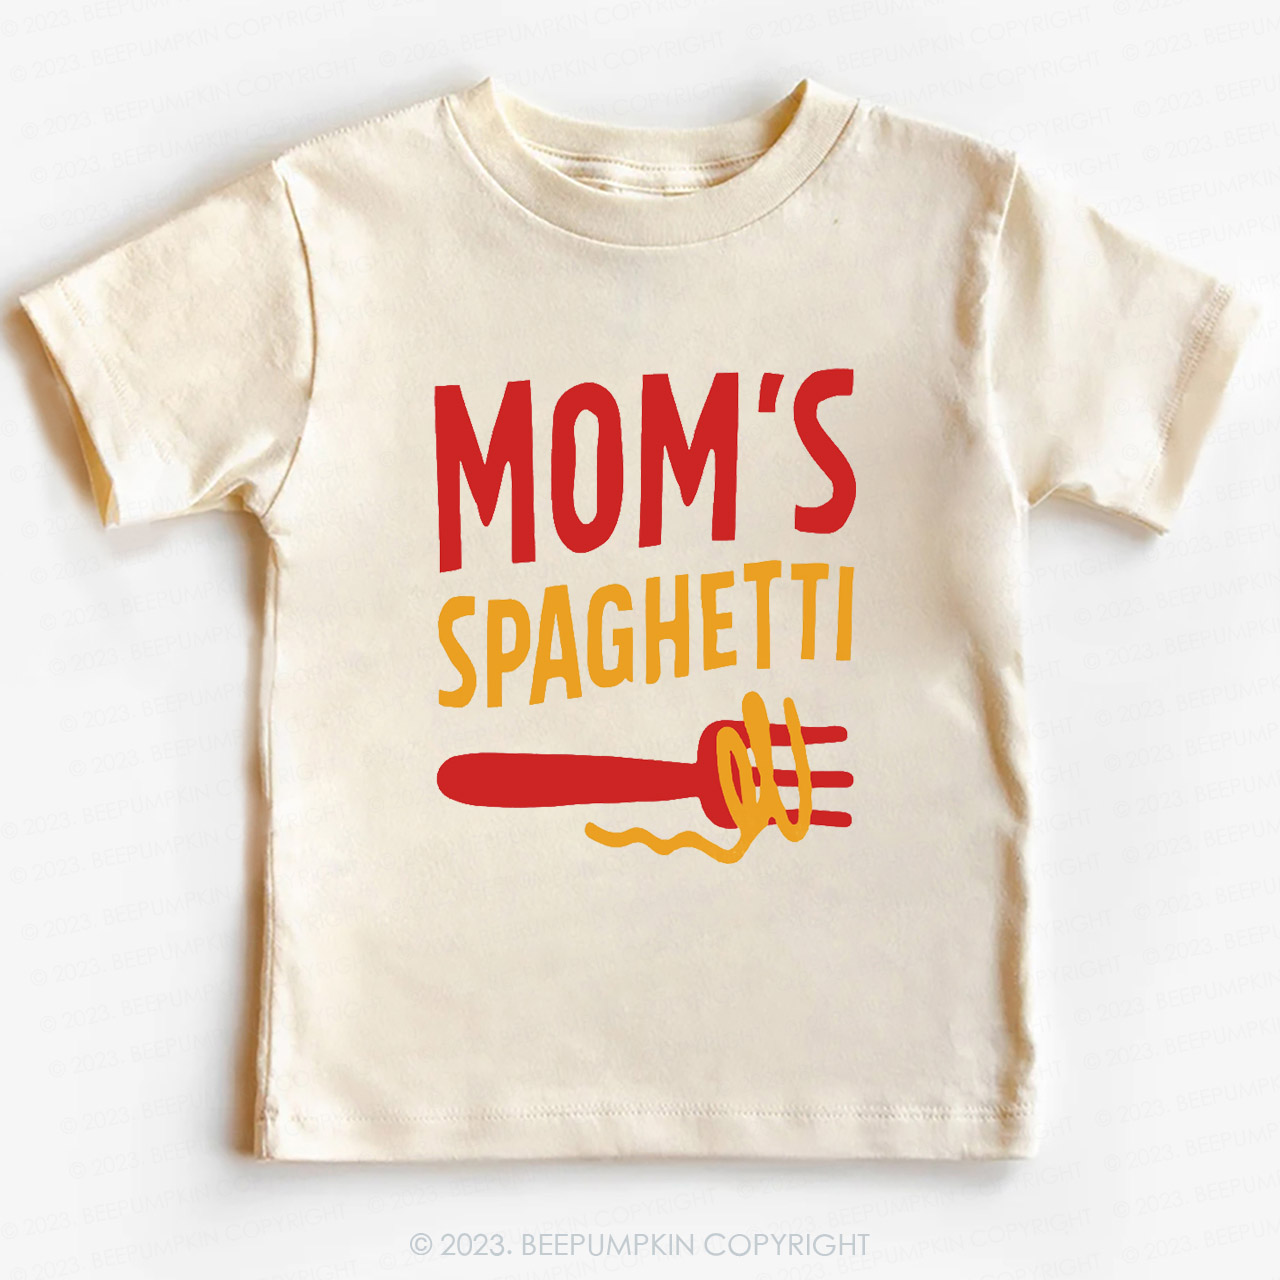 Mom's Spaghetti -Toddler Tees